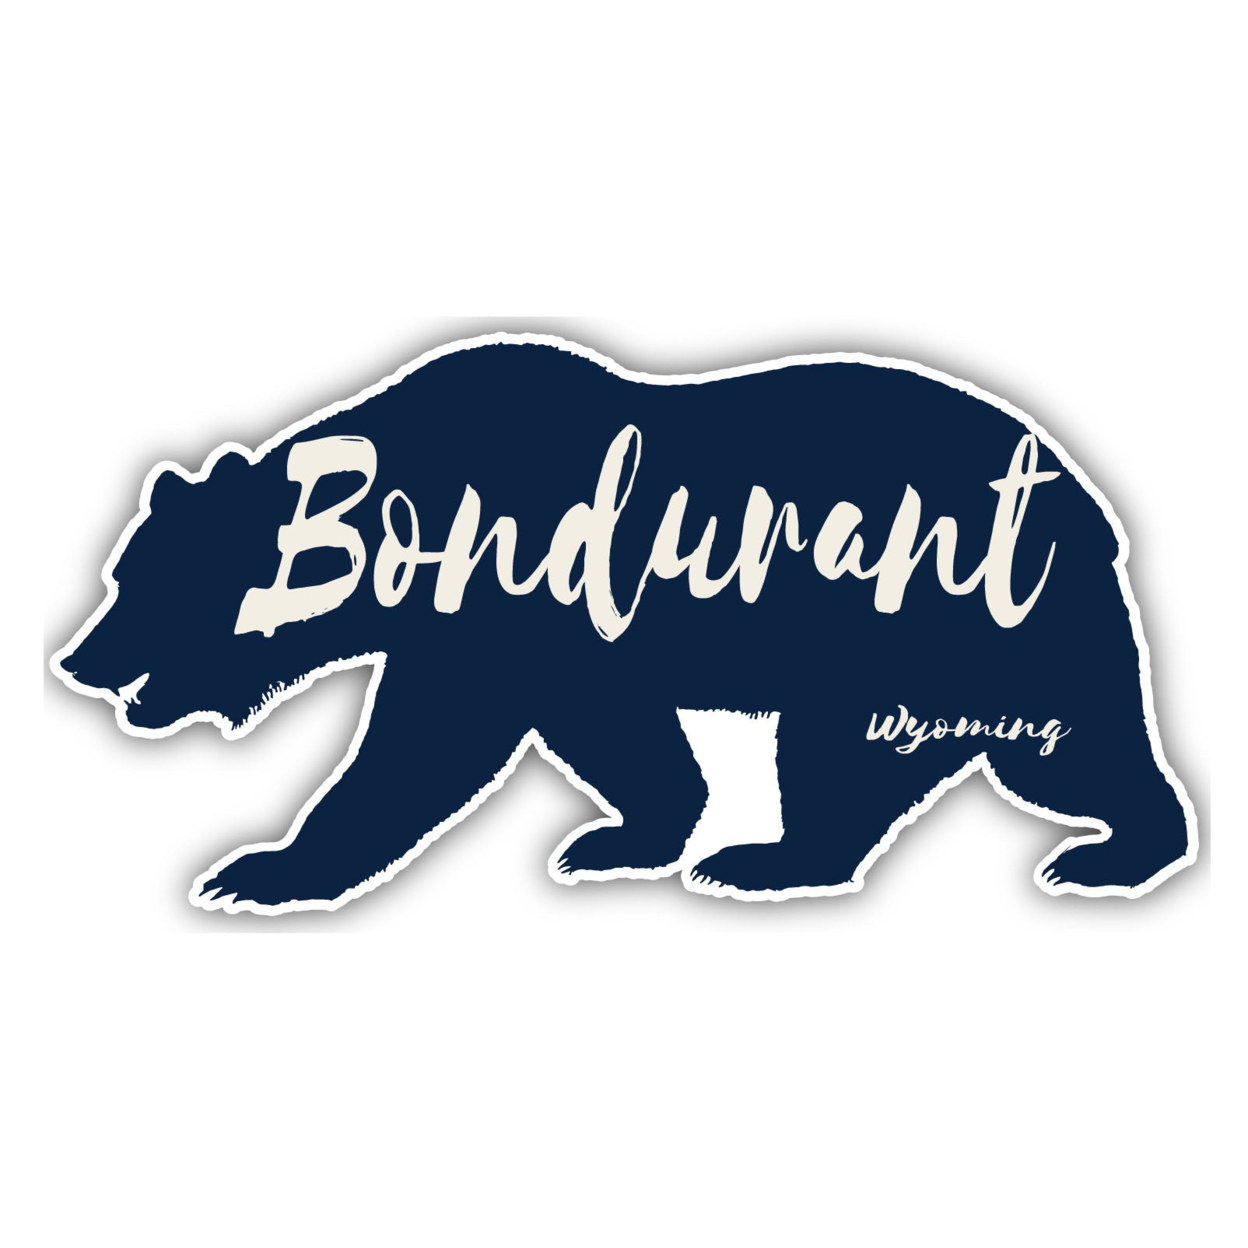 Bondurant Wyoming Souvenir Decorative Stickers (Choose Theme And Size) - 4-Pack, 2-Inch, Bear